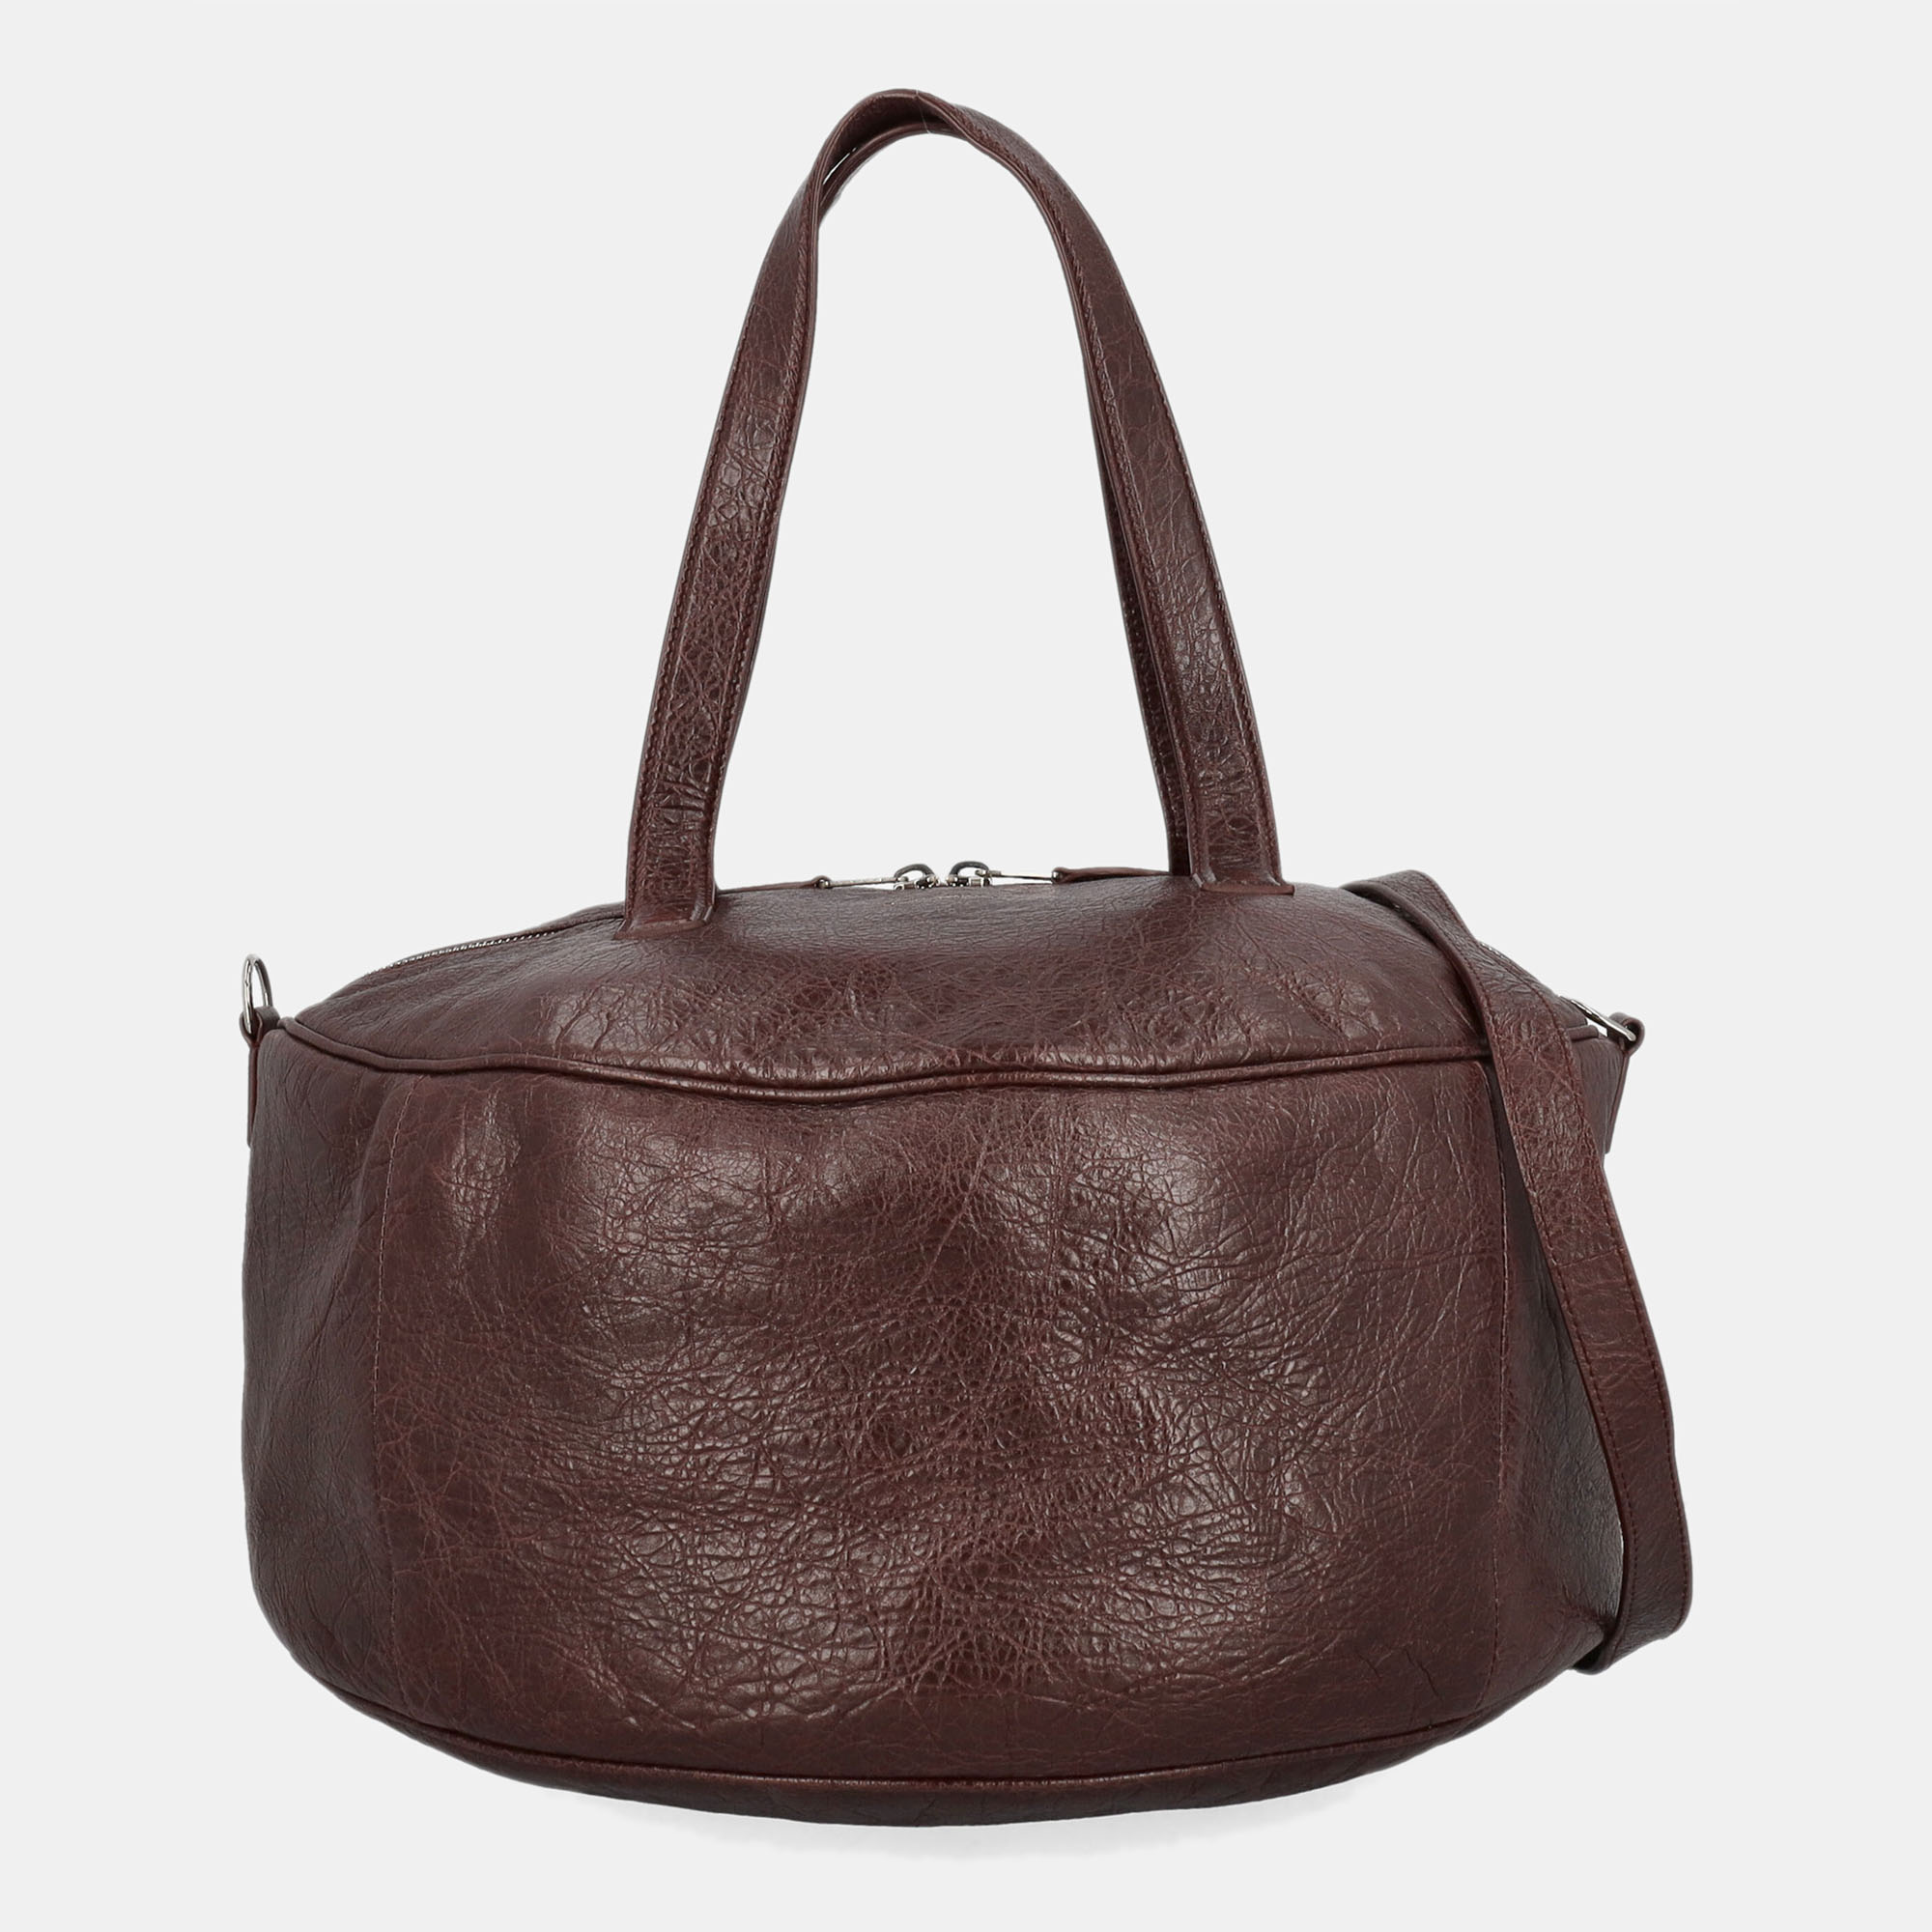 Balenciaga  Women's Leather Shoulder Bag - Burgundy - One Size